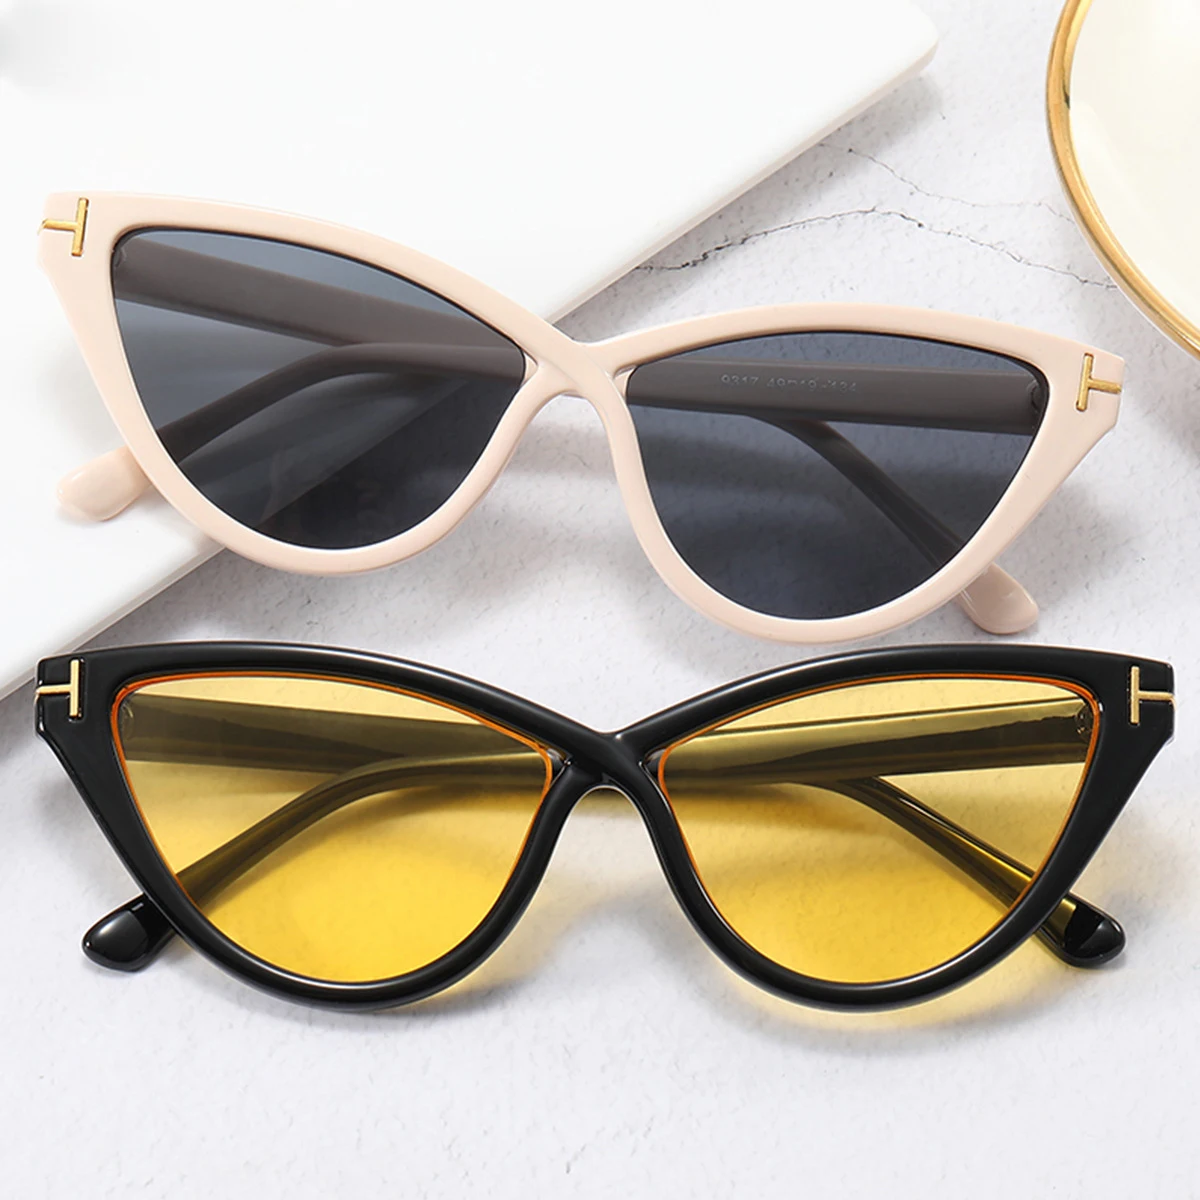 

2022 RTS TOM FQRD Big Frame Sunglasses Vintage Cat Eye Gafas De Sol PC Trendy Sun Glasses Sunglasses For Women, Picture